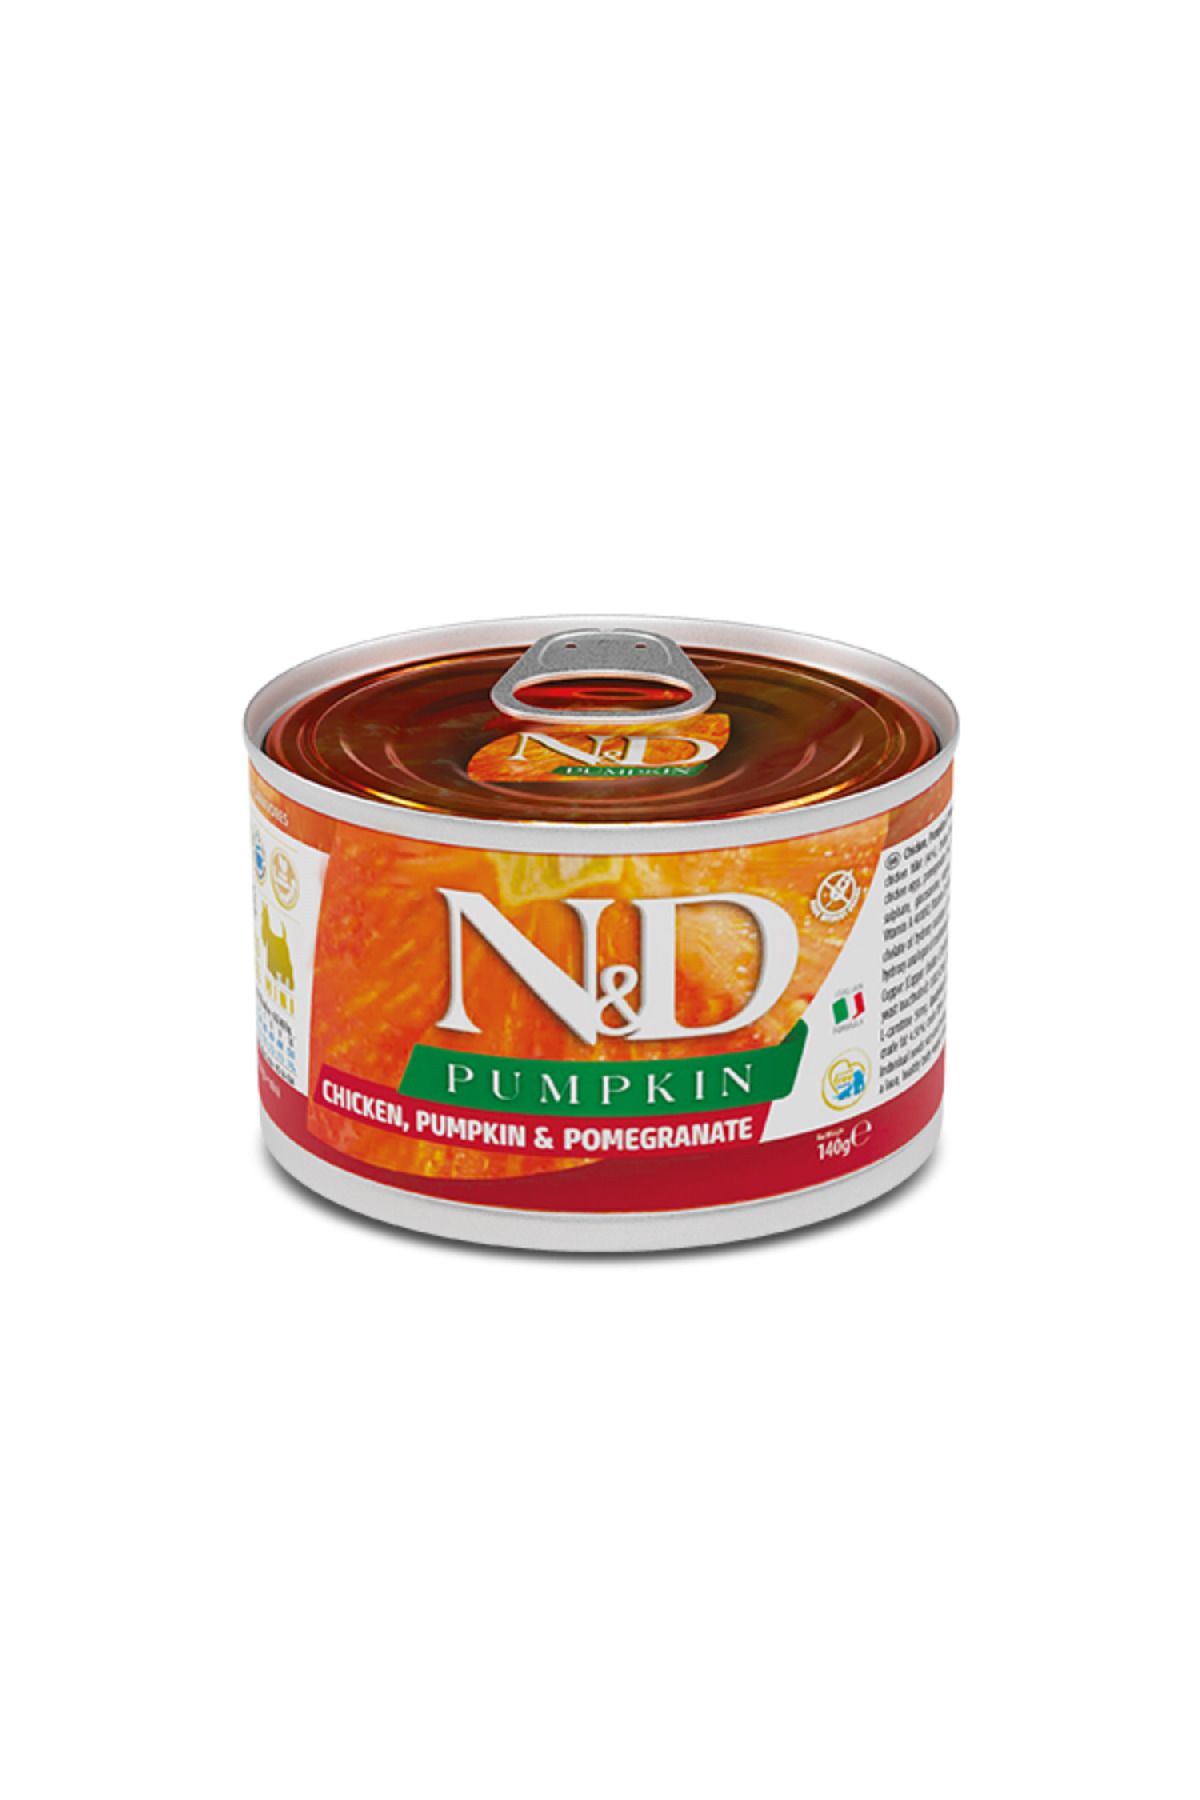 N & D Pumpkin Tavuklu Ve Narlı Puppy Köpek Konserve 140 gr 6 Lı